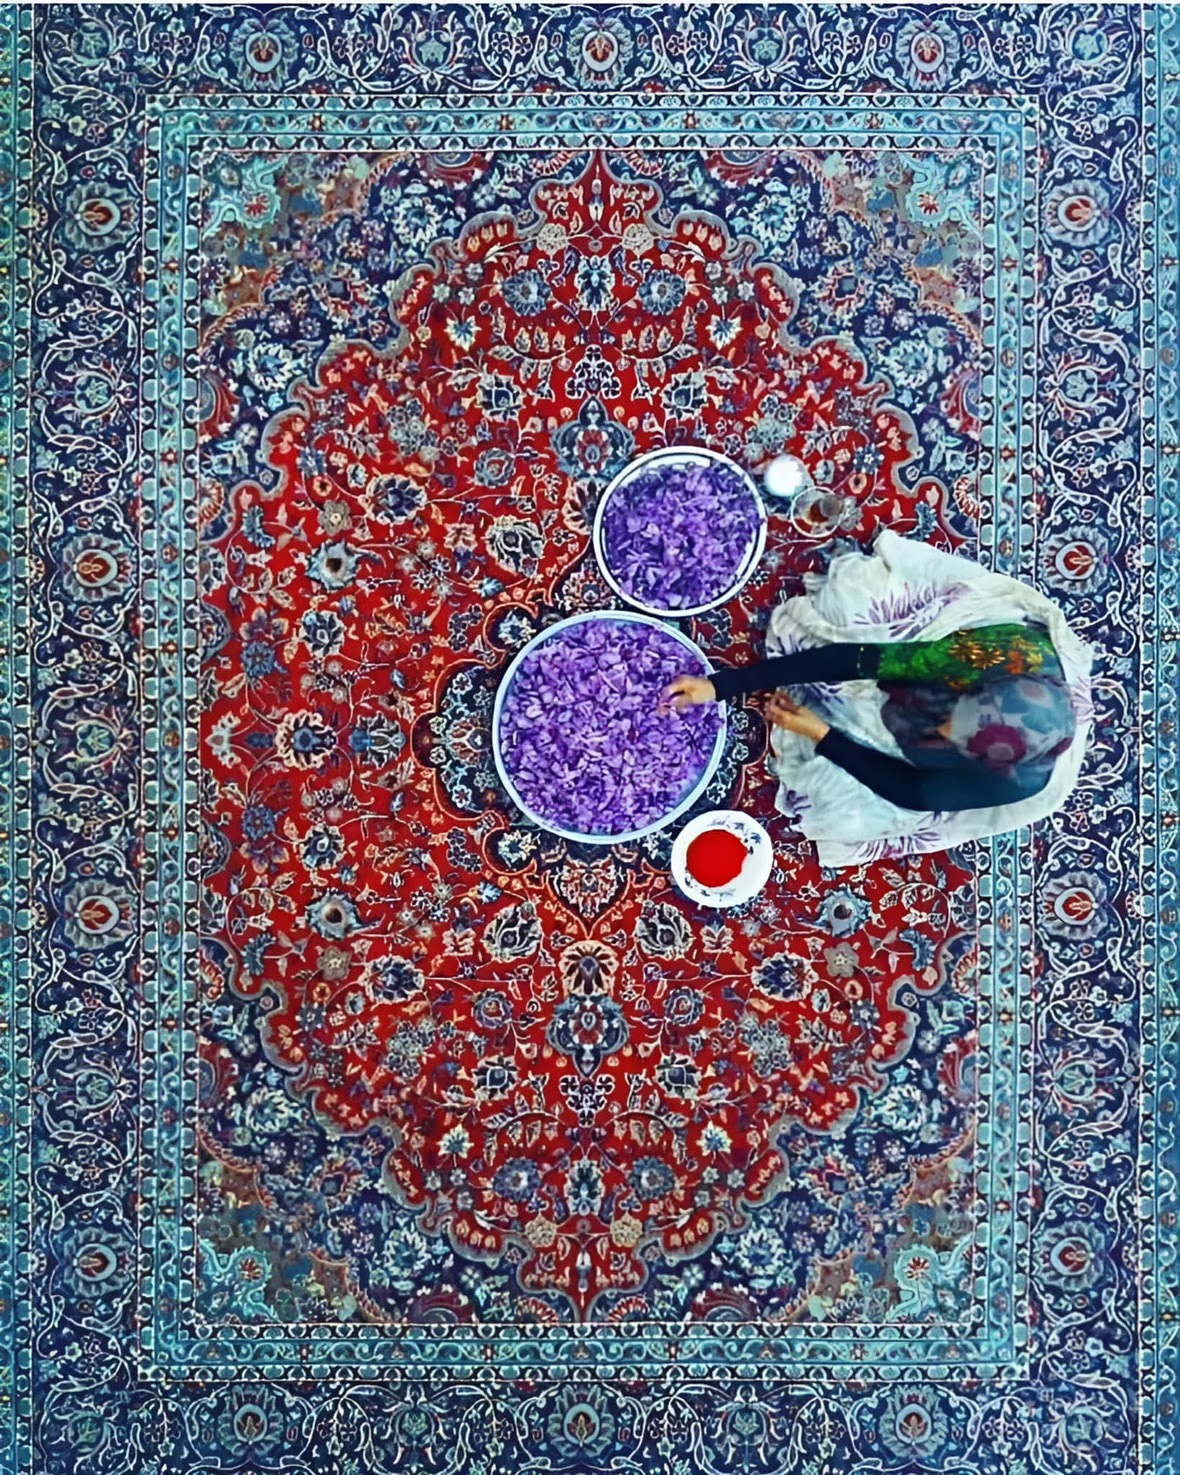 Iranian woman working with saffron